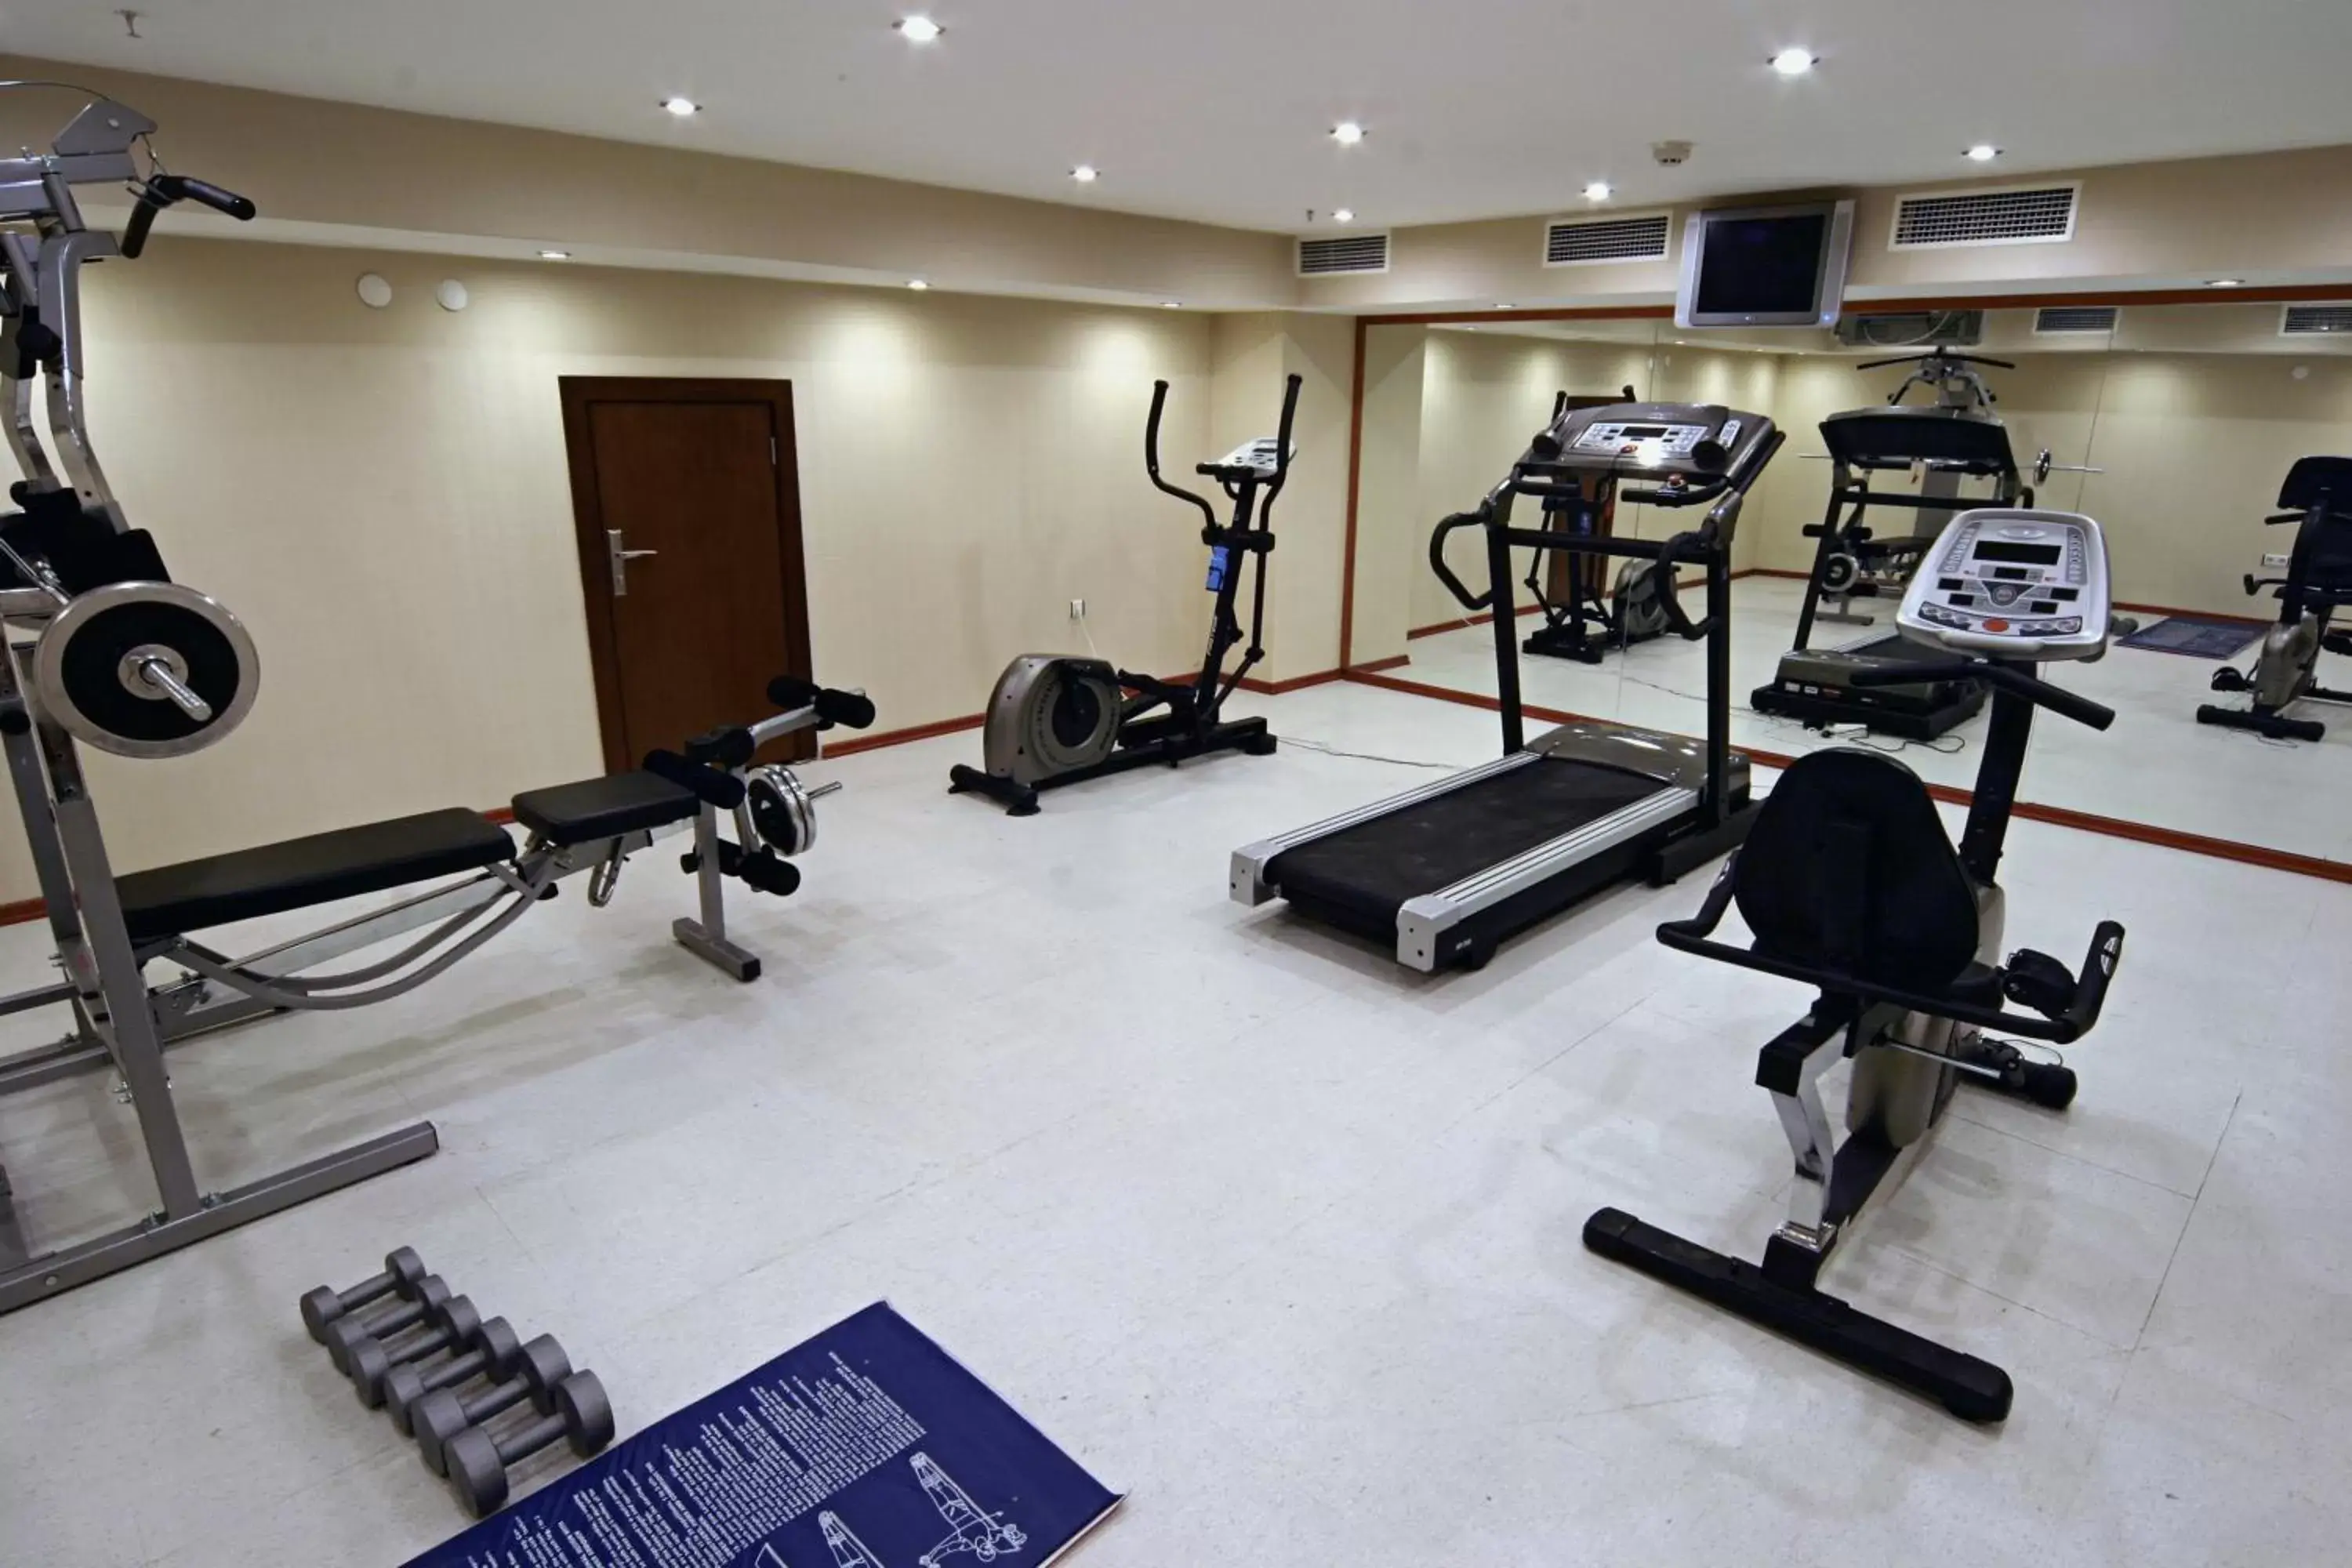 Fitness centre/facilities, Fitness Center/Facilities in CK Farabi Hotel